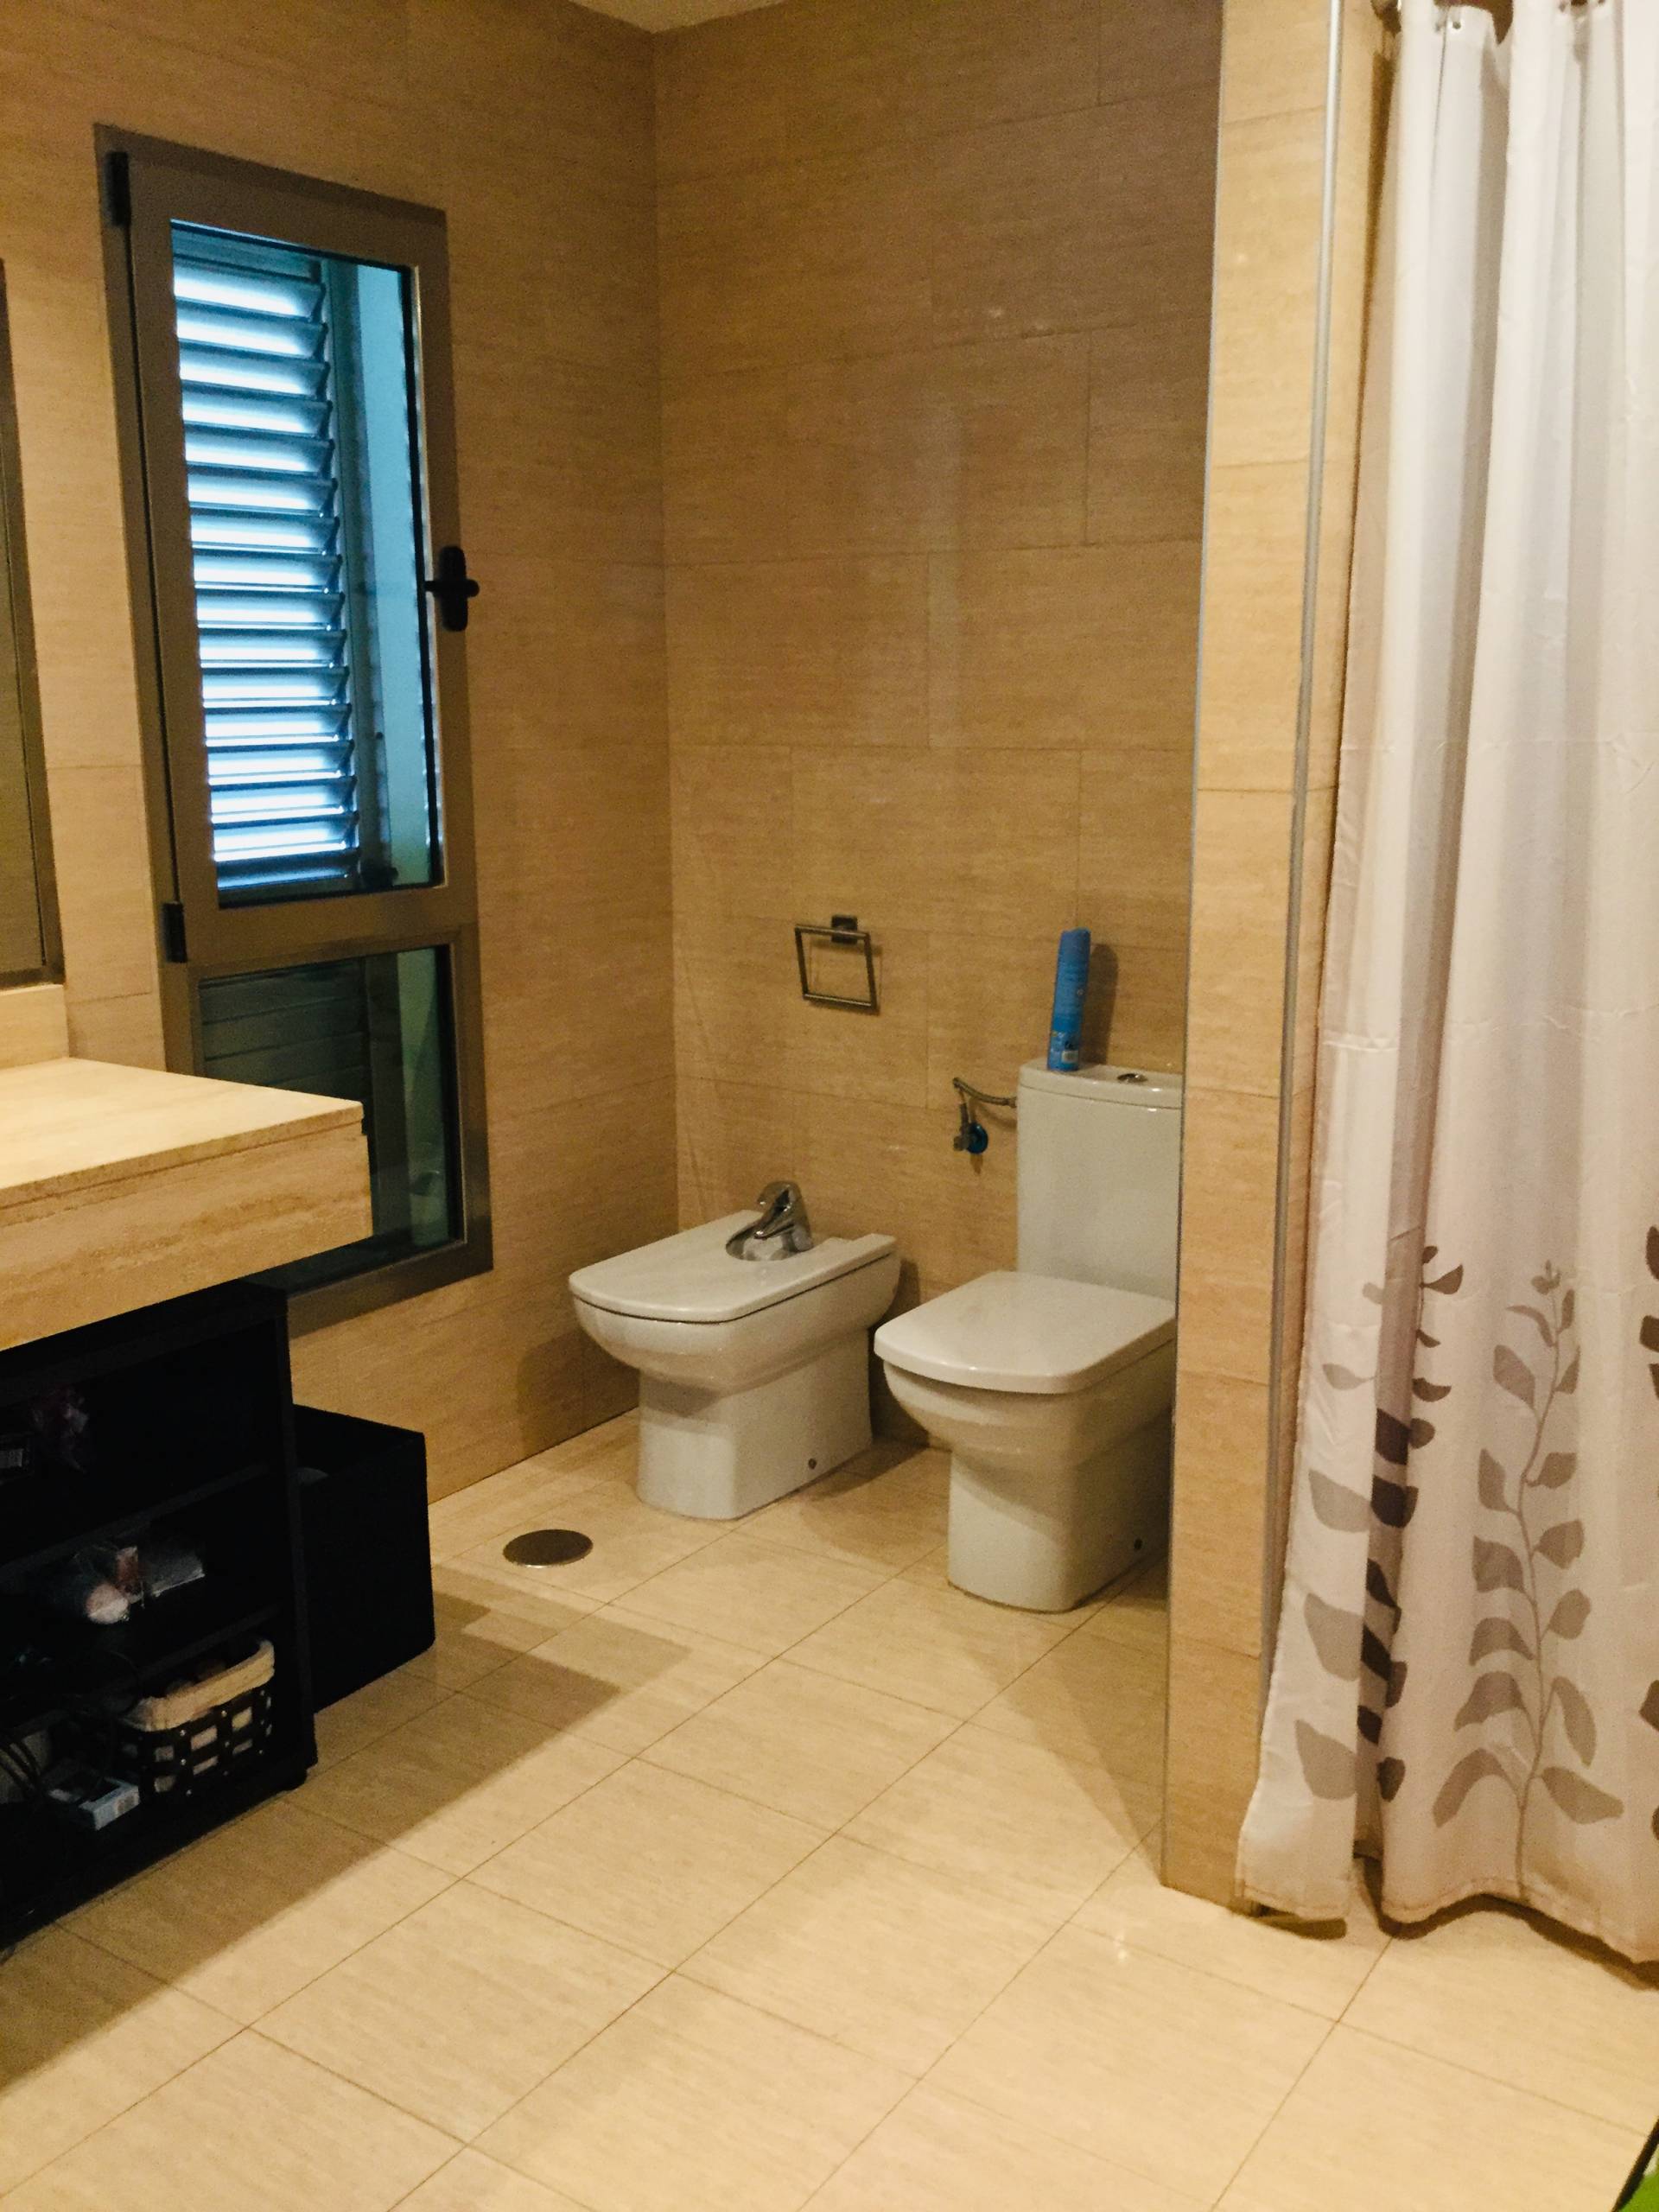 La Minilla - Furnished duplex for rent in Gran Canaria